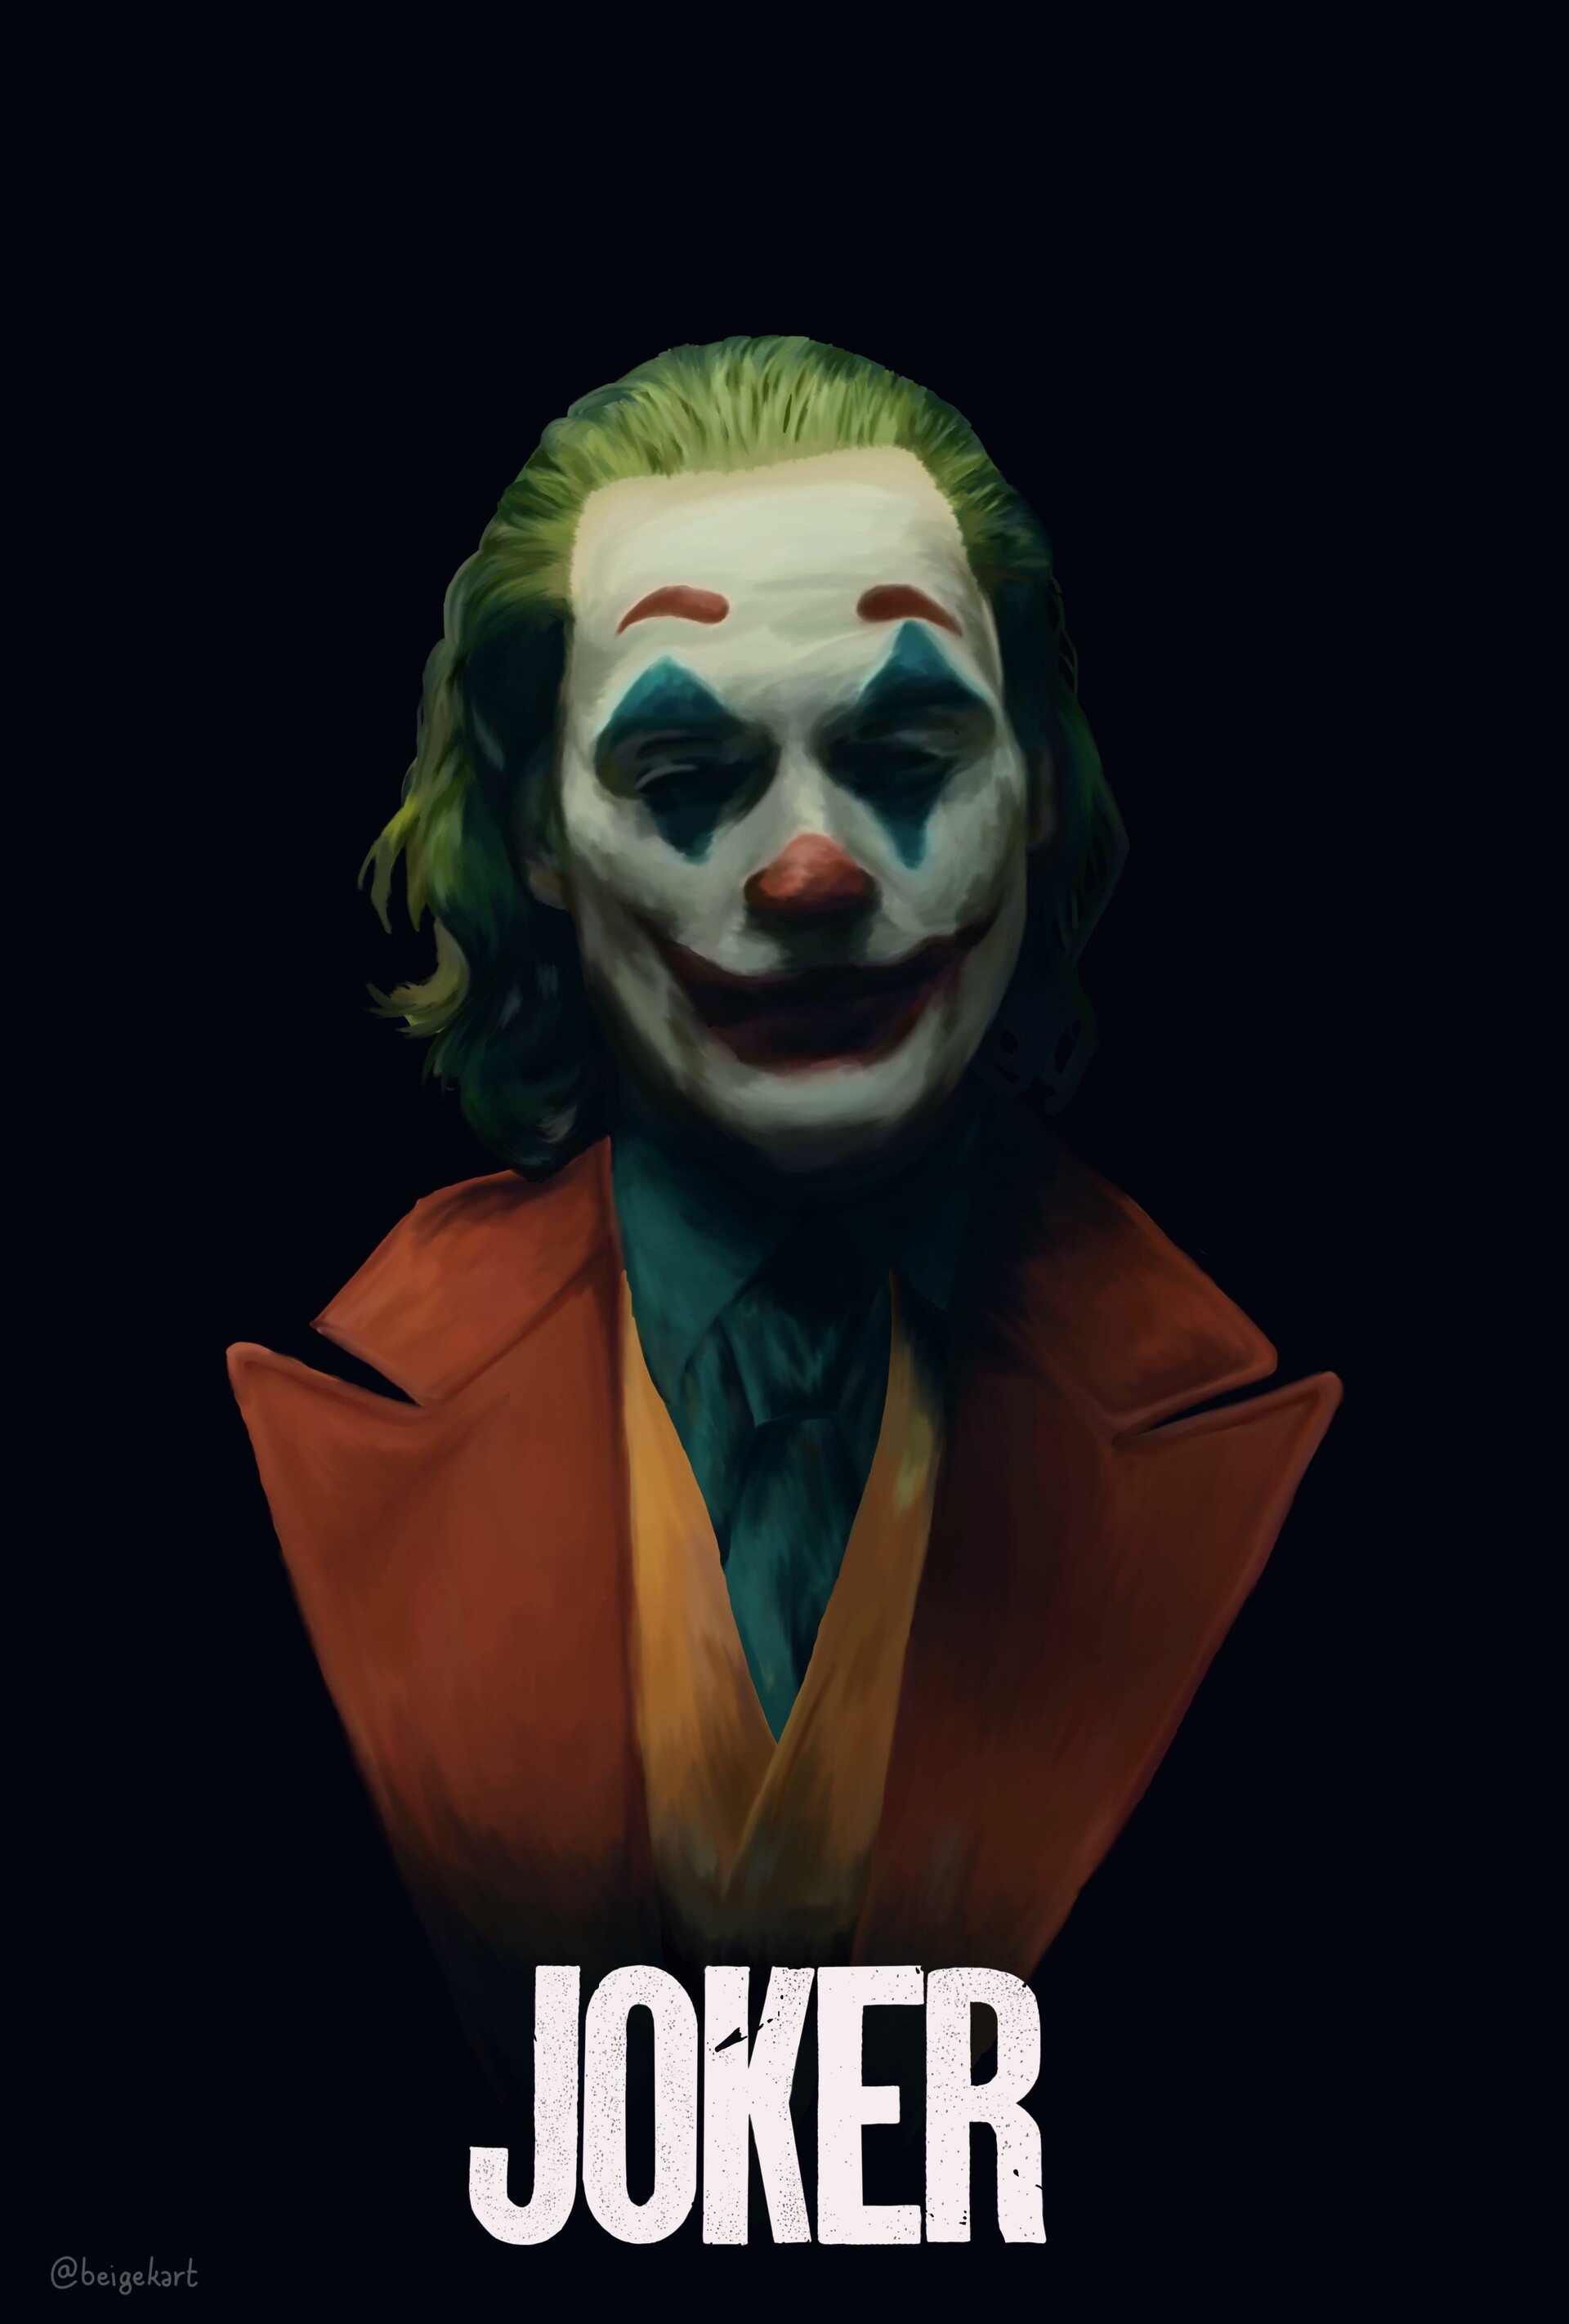 ArtStation - Joker: Dark Poster